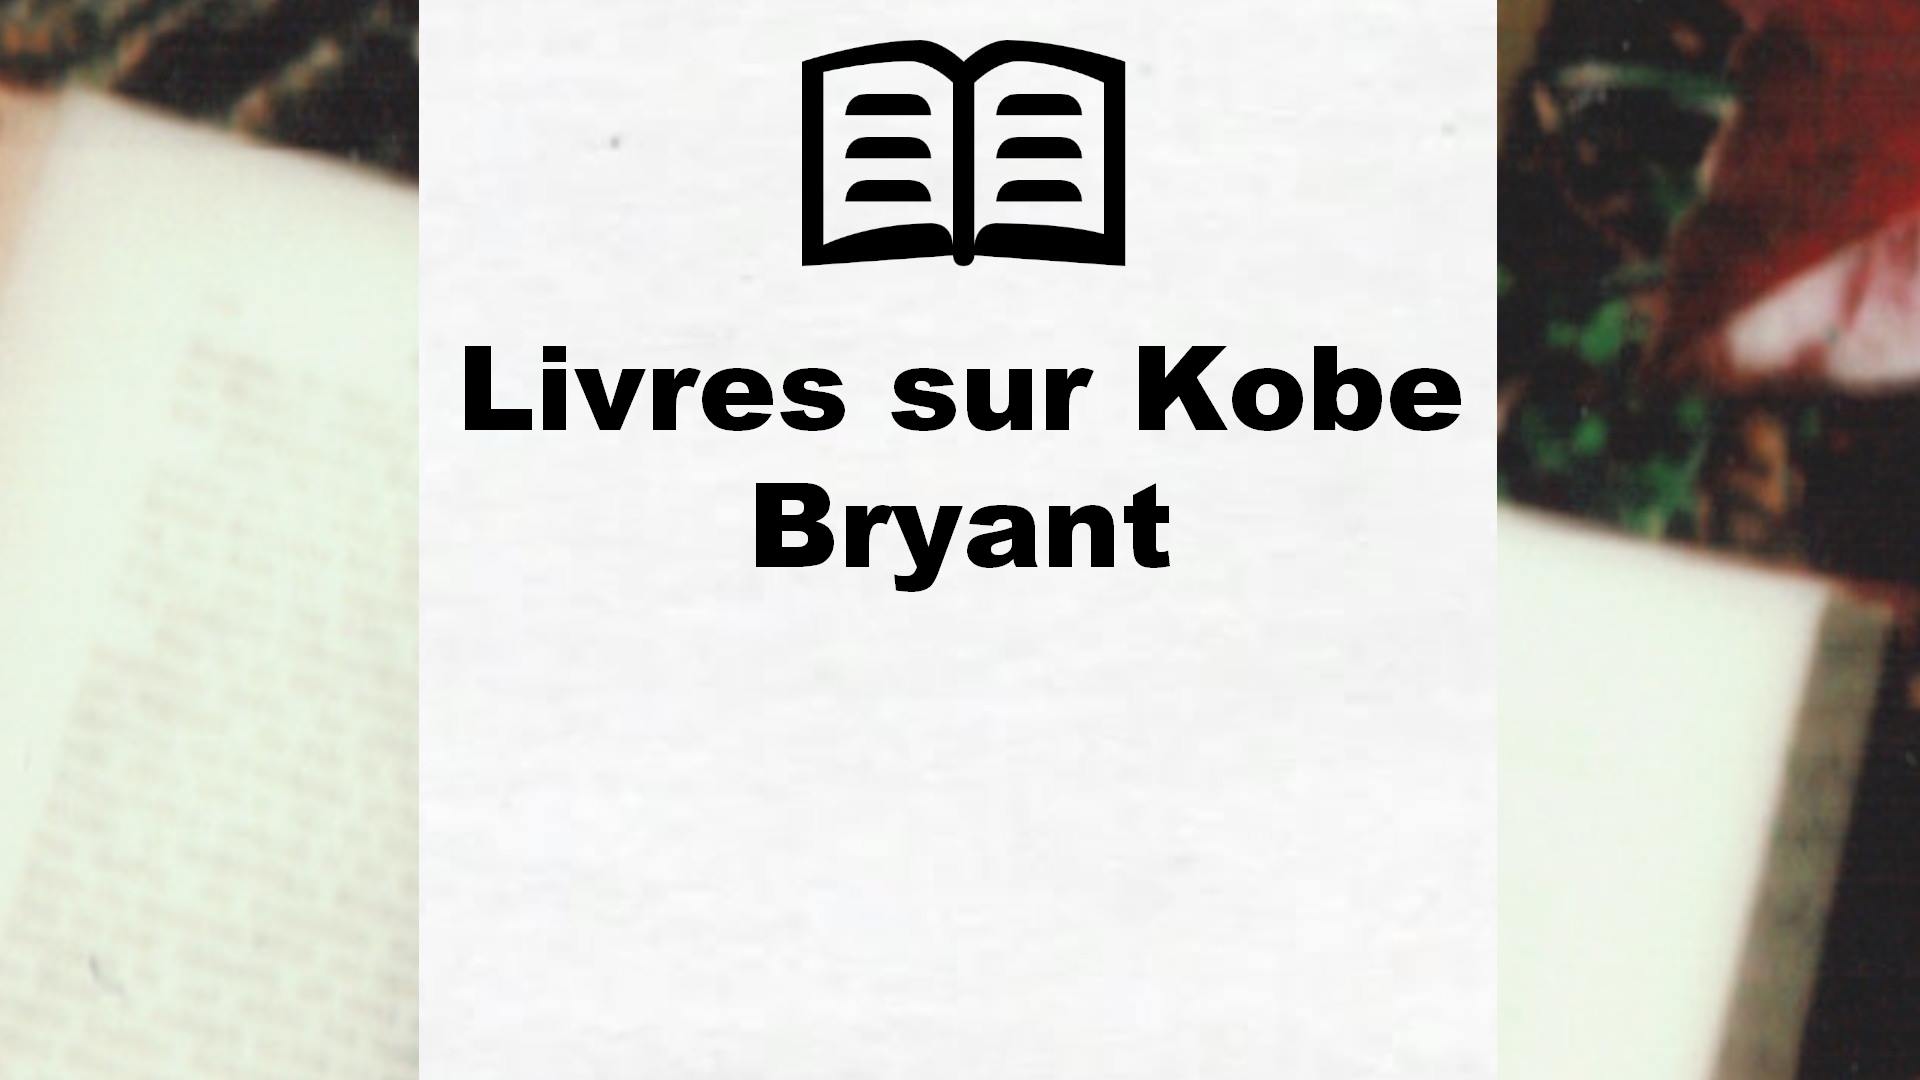 Livres sur Kobe Bryant